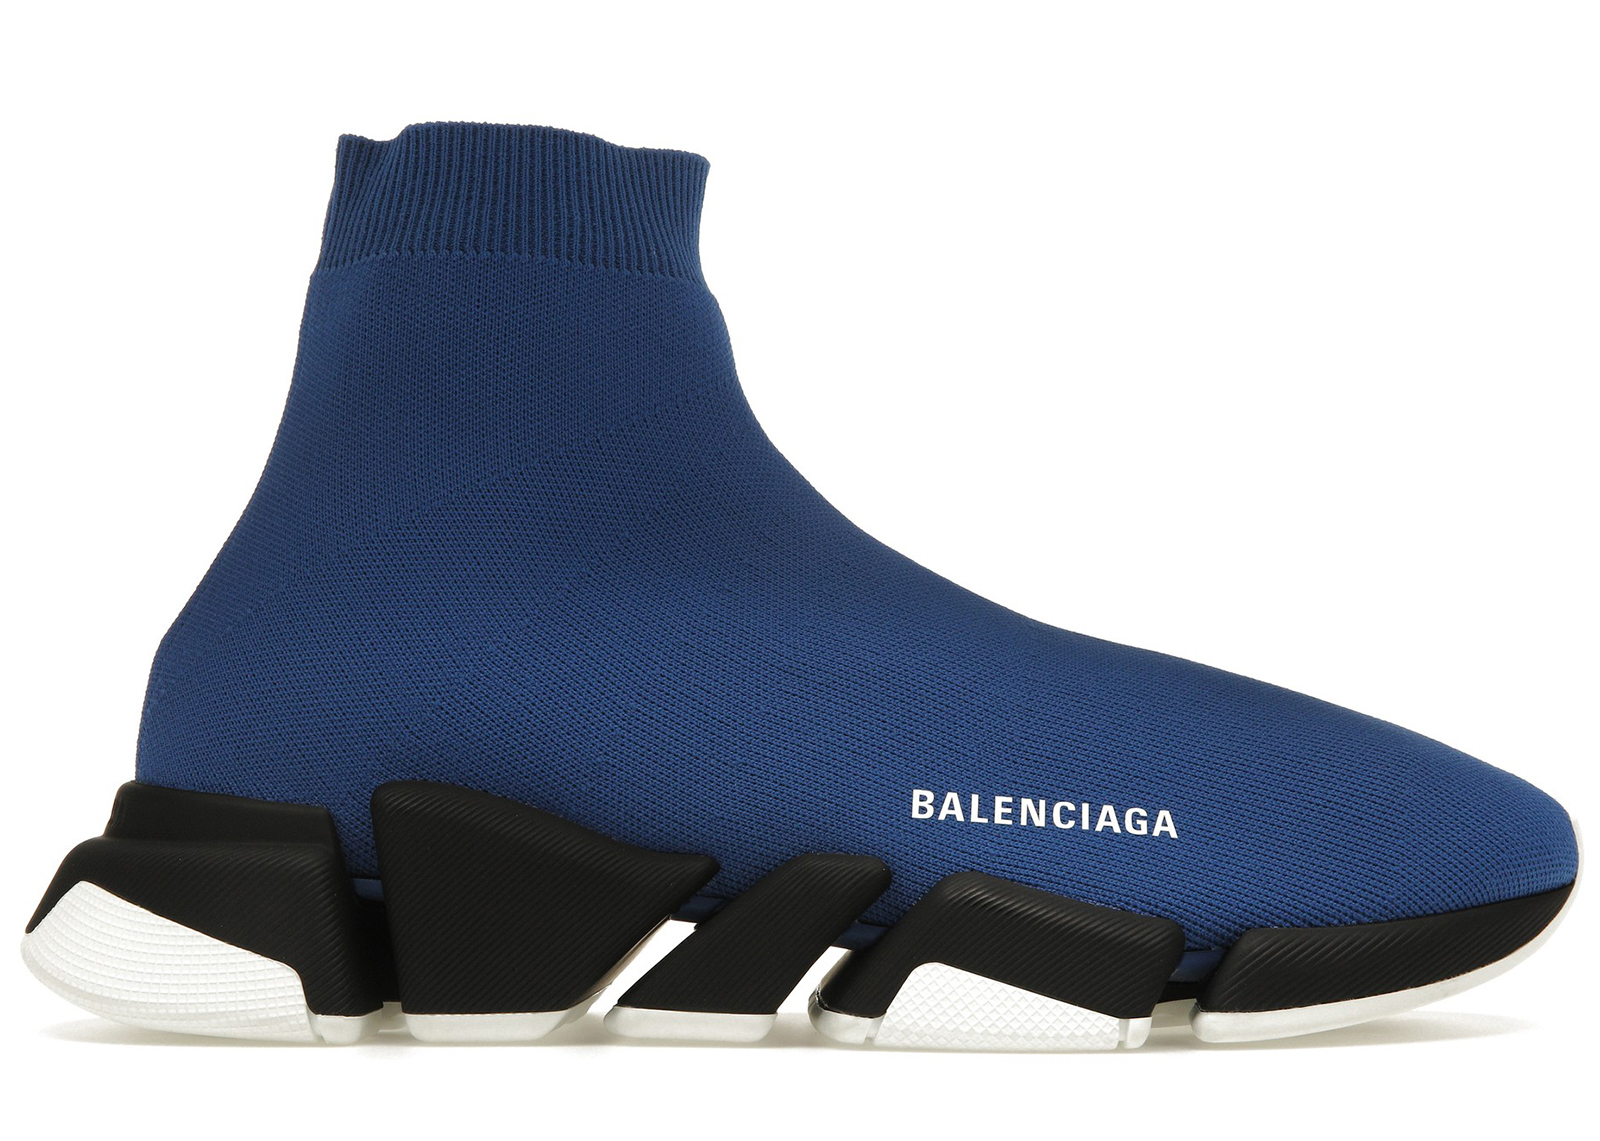 𝐏𝐈𝐍𝐓𝐄𝐑𝐄𝐒𝐓 𝐓𝐇𝐄𝐅𝐄𝐌𝐀𝐋𝐄𝐇𝐔𝐍𝐂𝐇𝐎  Sole sneakers  Sneakers Balenciaga triple s clear sole